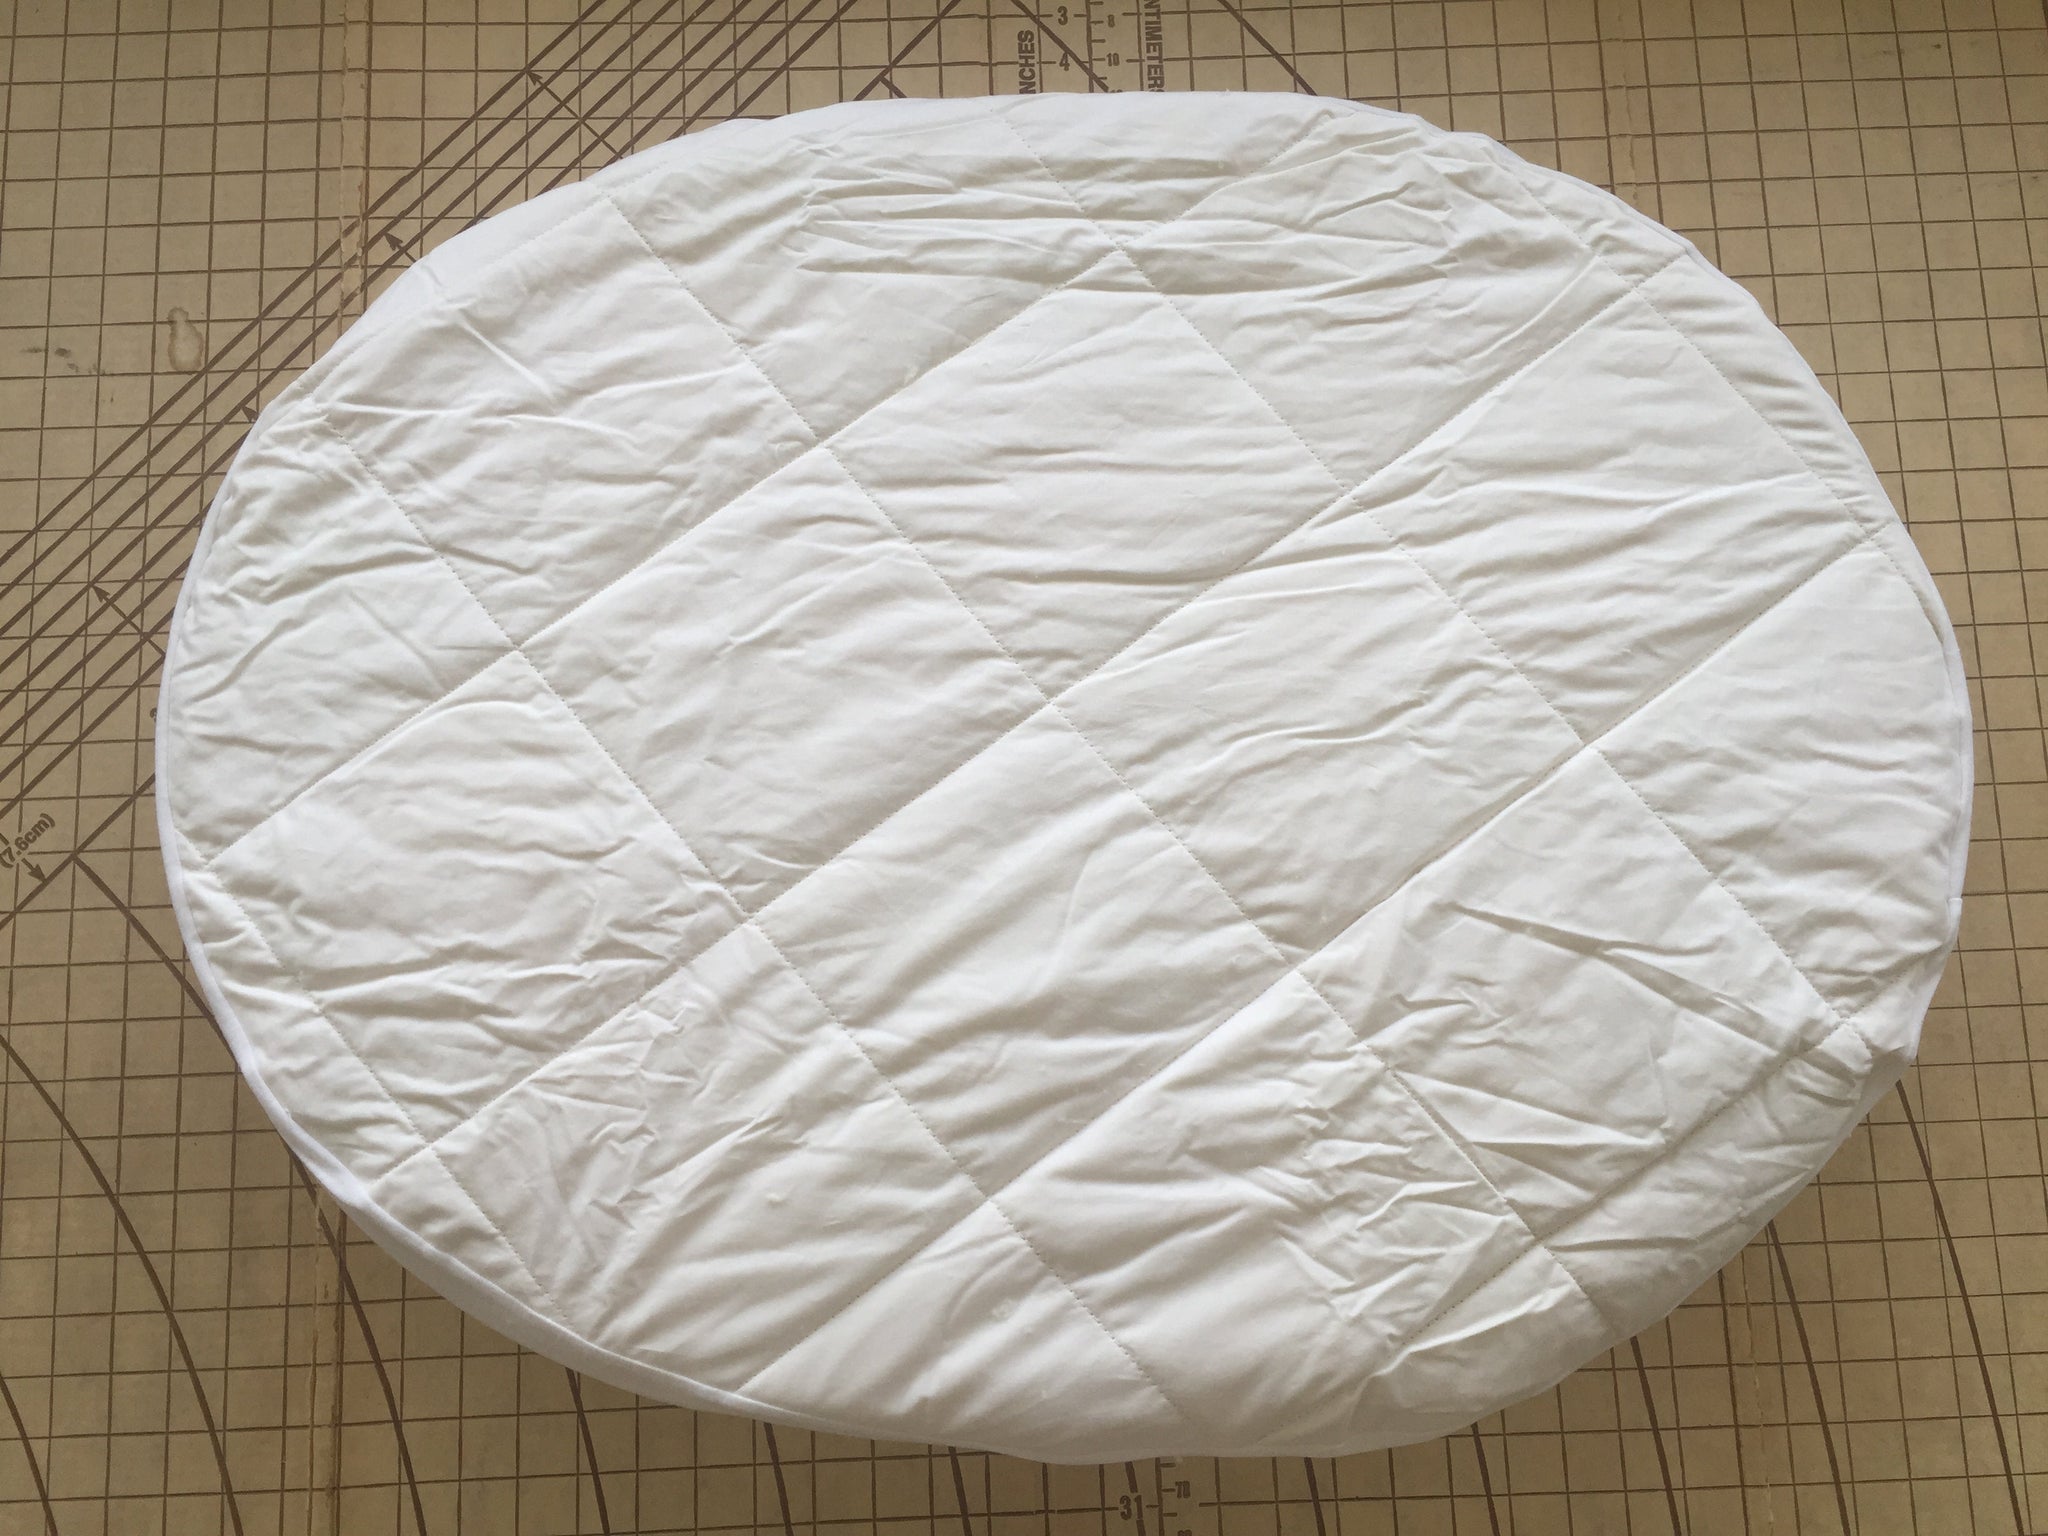 Twin Pack Rectangular Bassinet 100% cotton top Quilted waterproof Mattress Protector